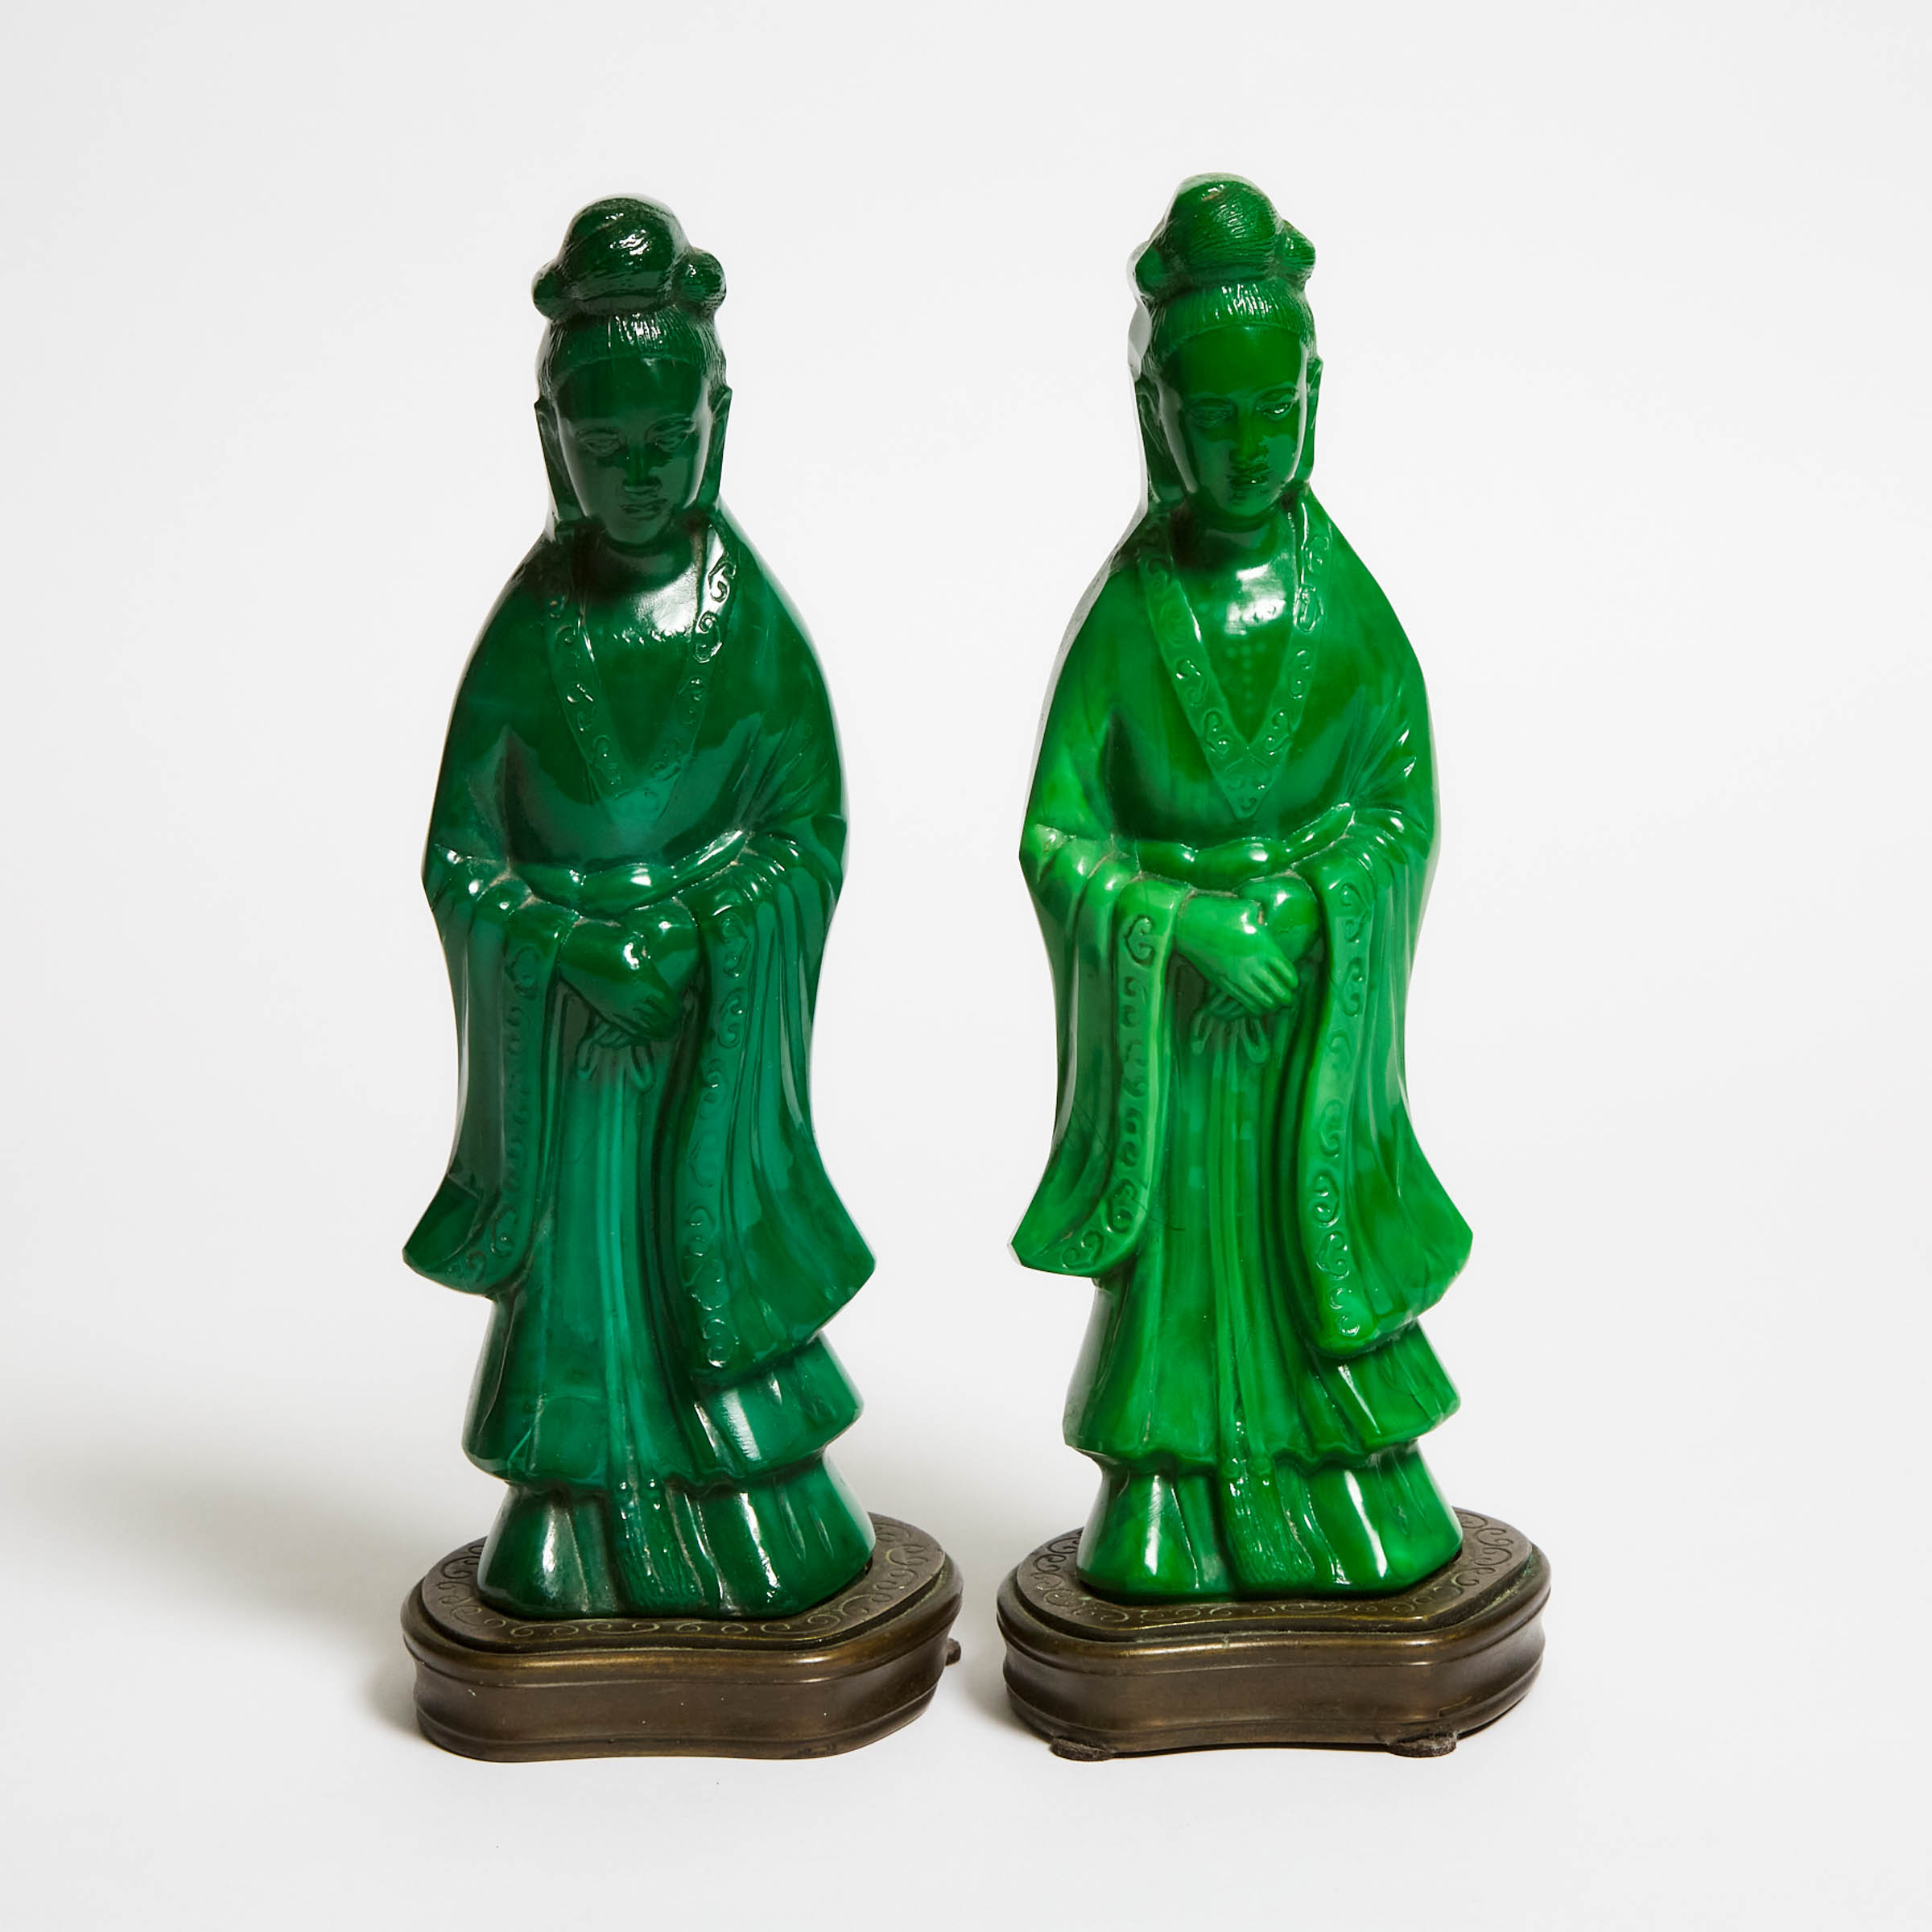 A Pair of Peking Glass Figures 2f2c4c